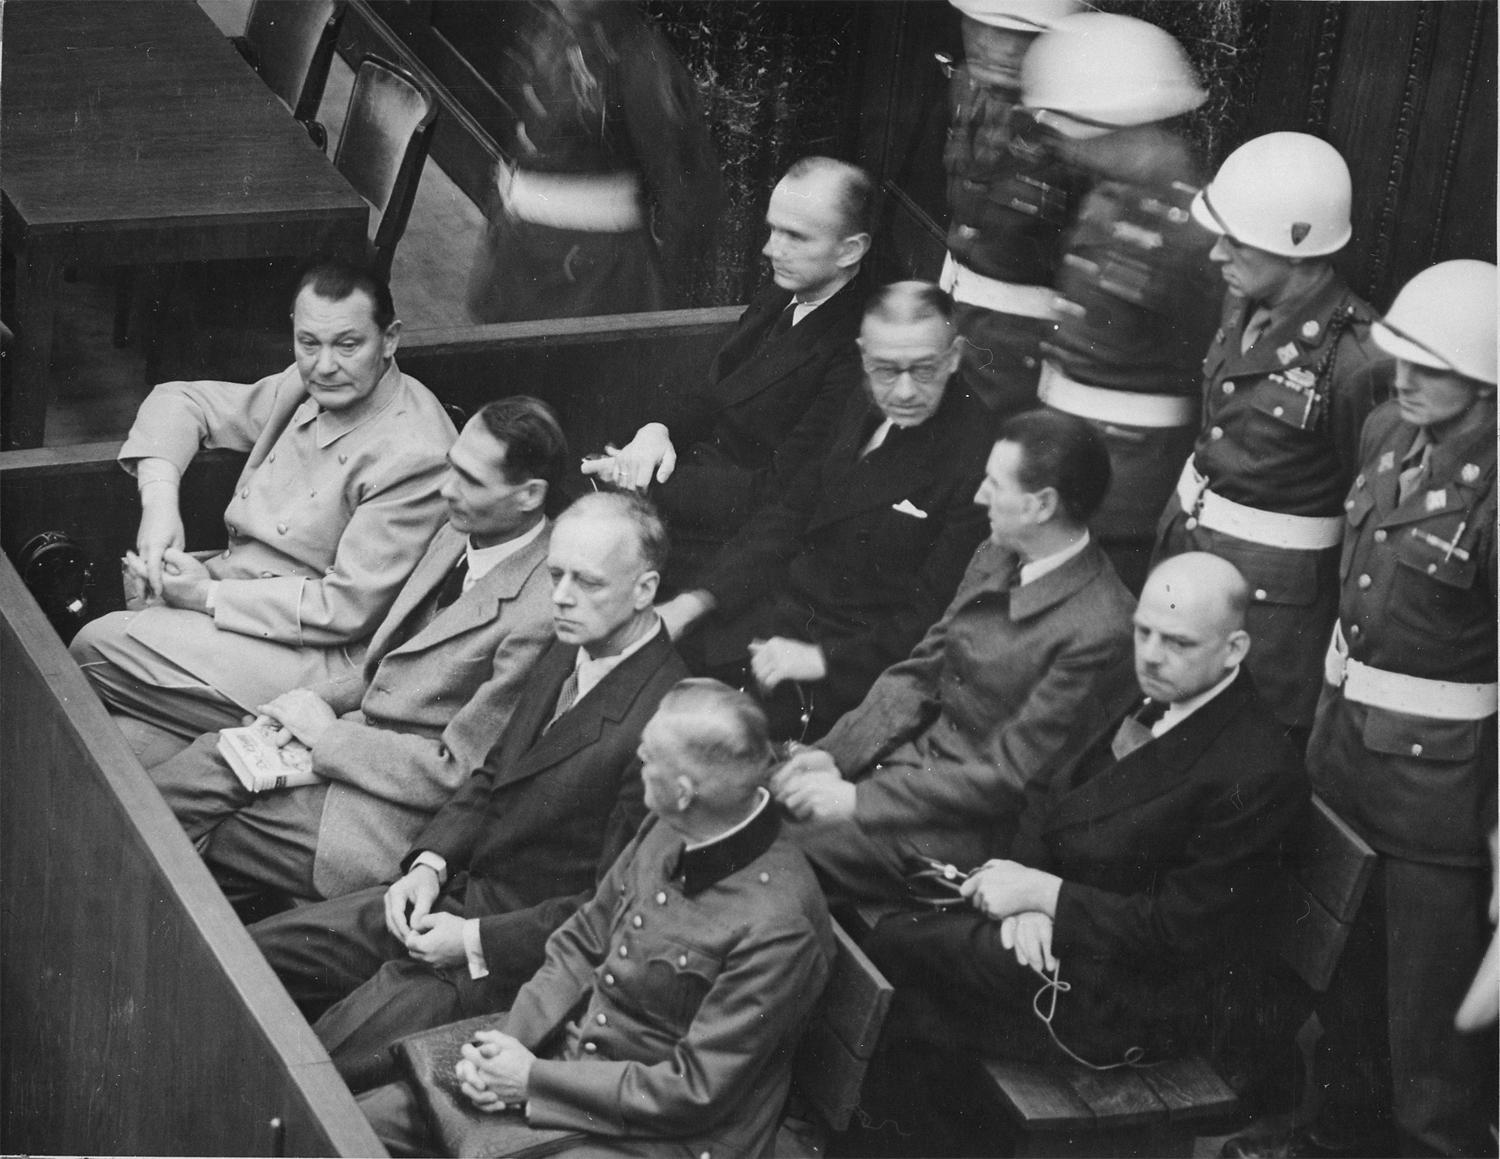 Procès de Nuremberg (1945-1946), les accusés dans leur box. Au premier rang, de gauche à droite: Hermann Göring, Rudolf Heß, Joachim von Ribbentrop, Wilhelm Keitel. Second rang: Karl Dönitz, Erich Raeder, Baldur von Schirach, Fritz Sauckel.  (National Archives and Records Administration)